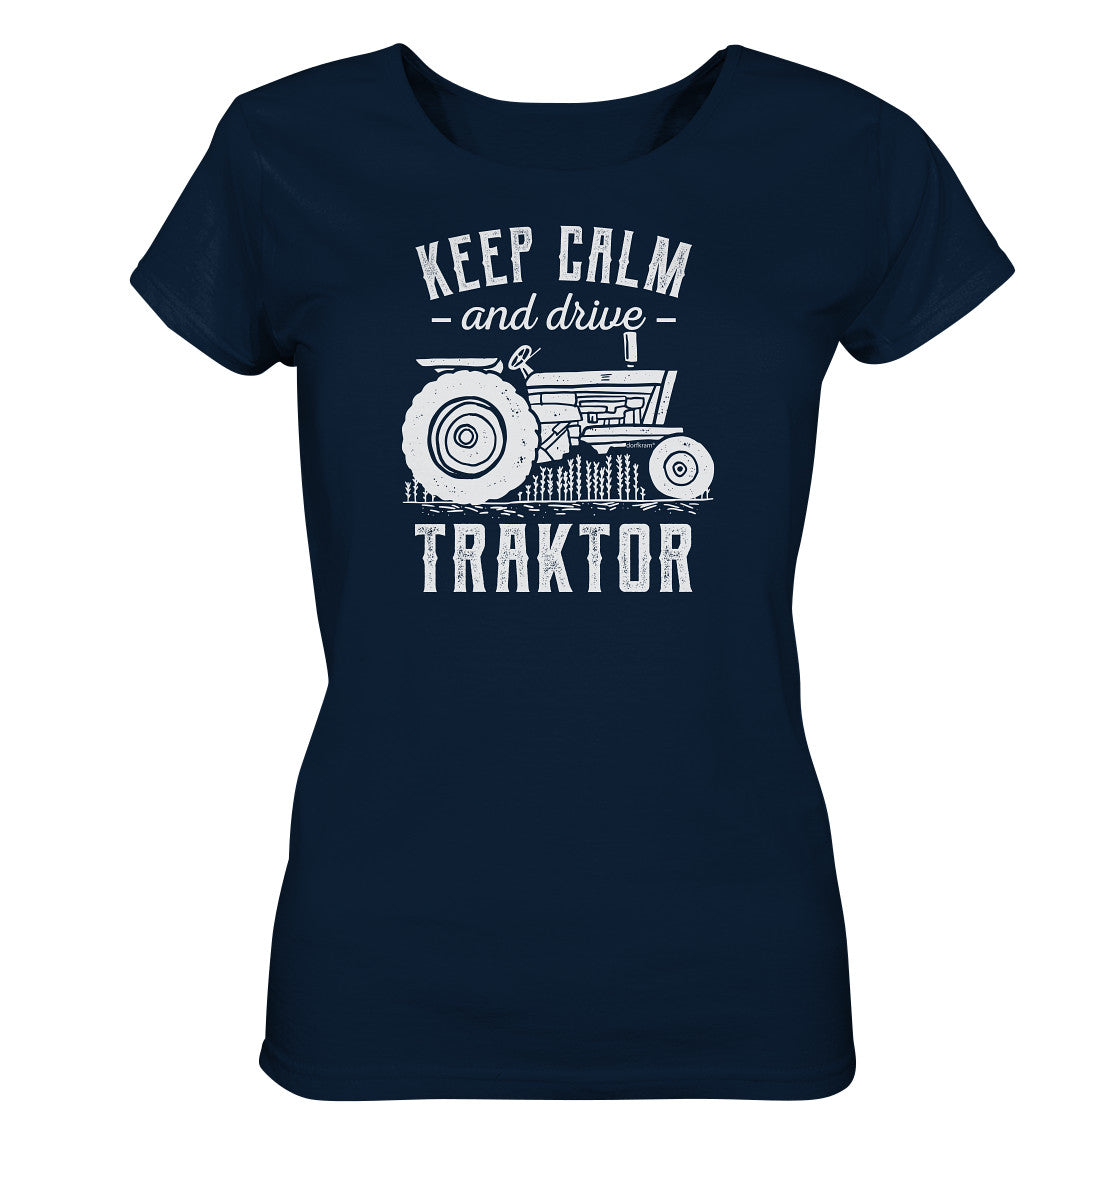 Traktor Shirt Damen schwarz Traktorfahren Treckerfahren navy